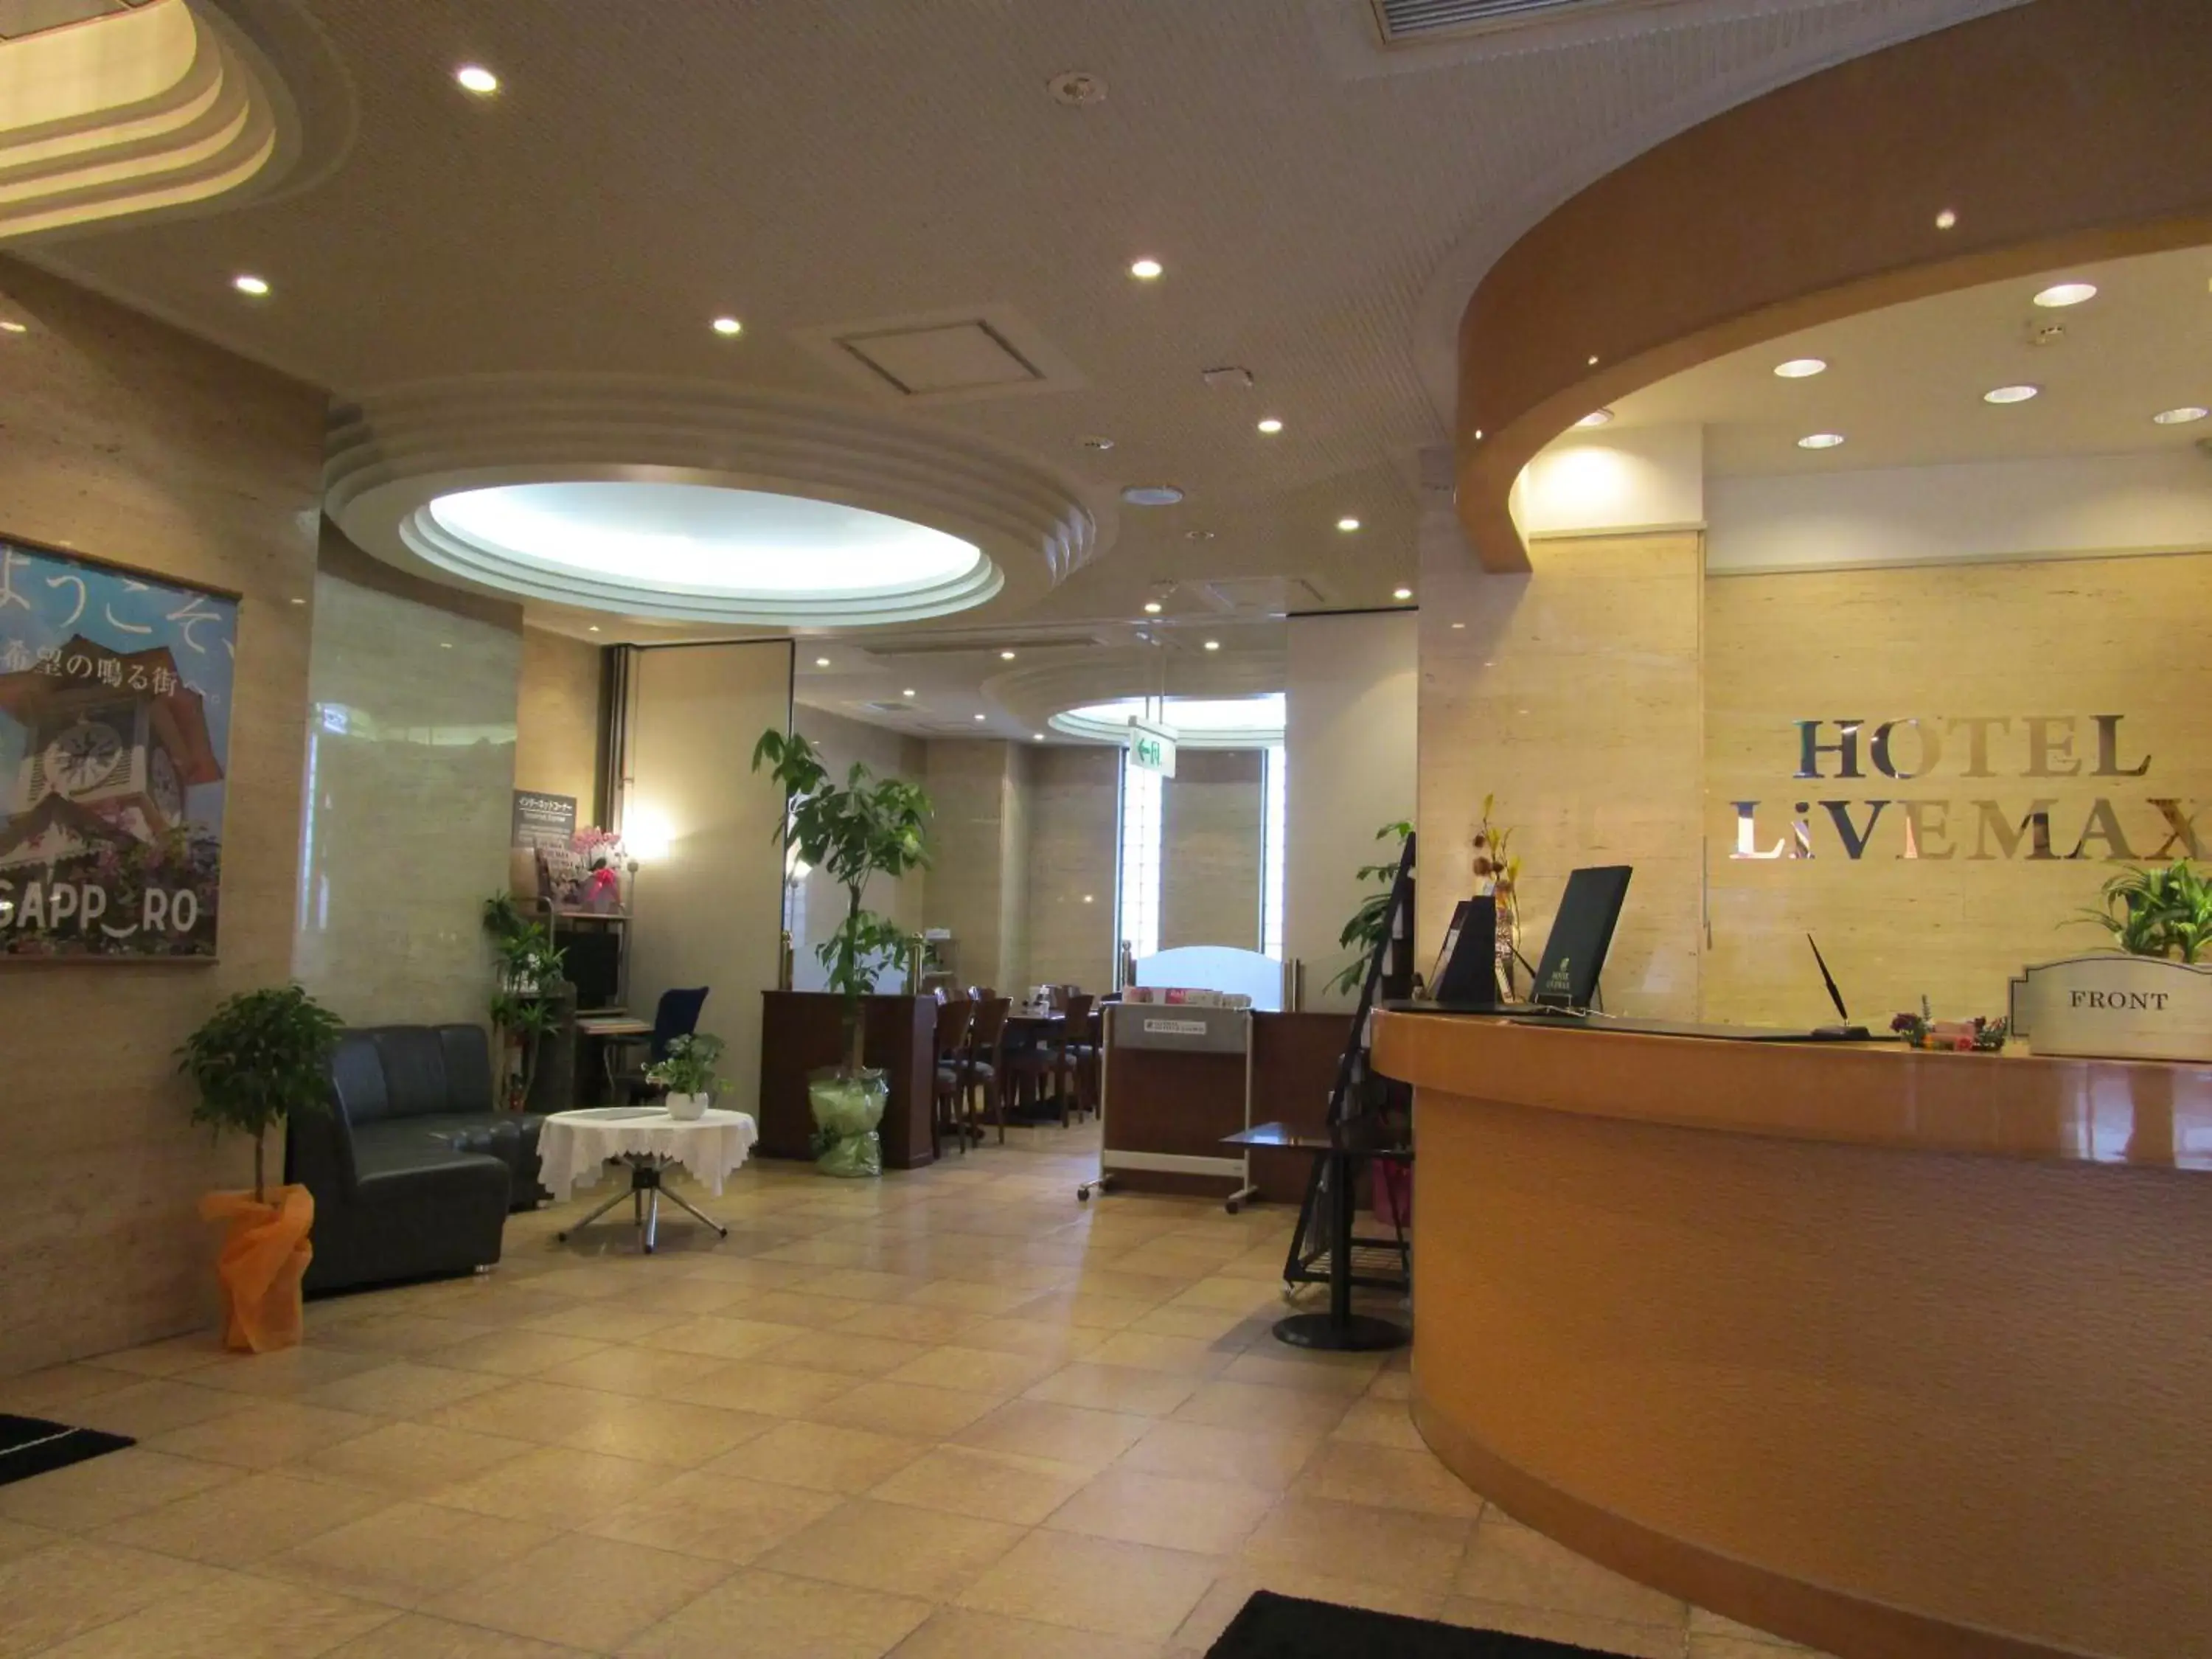 Lobby or reception, Lobby/Reception in HOTEL LiVEMAX Sapporo Ekimae